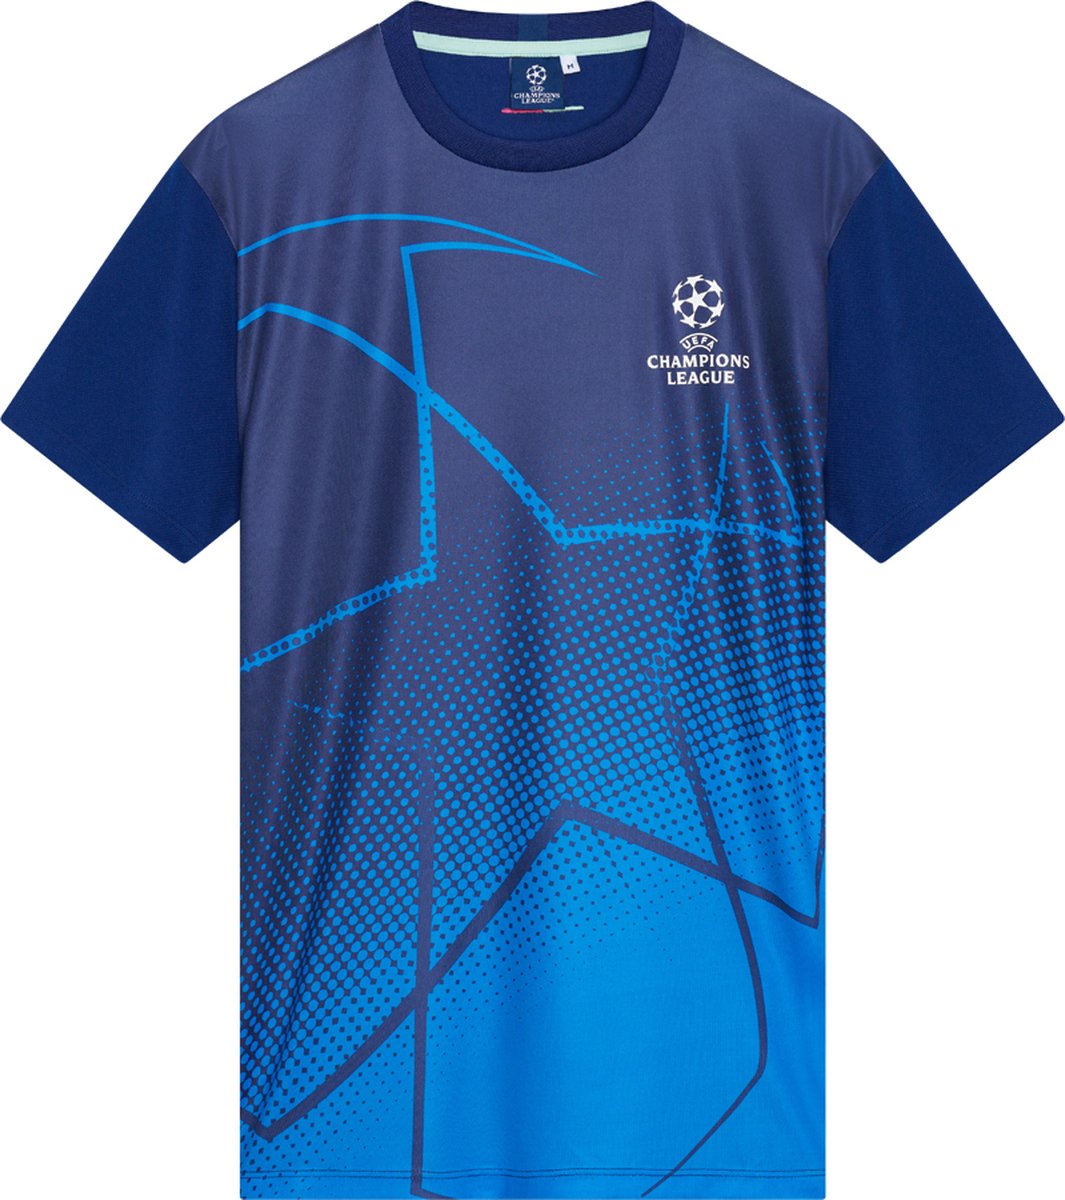 Champions League voetbalshirt fade heren - maat XL